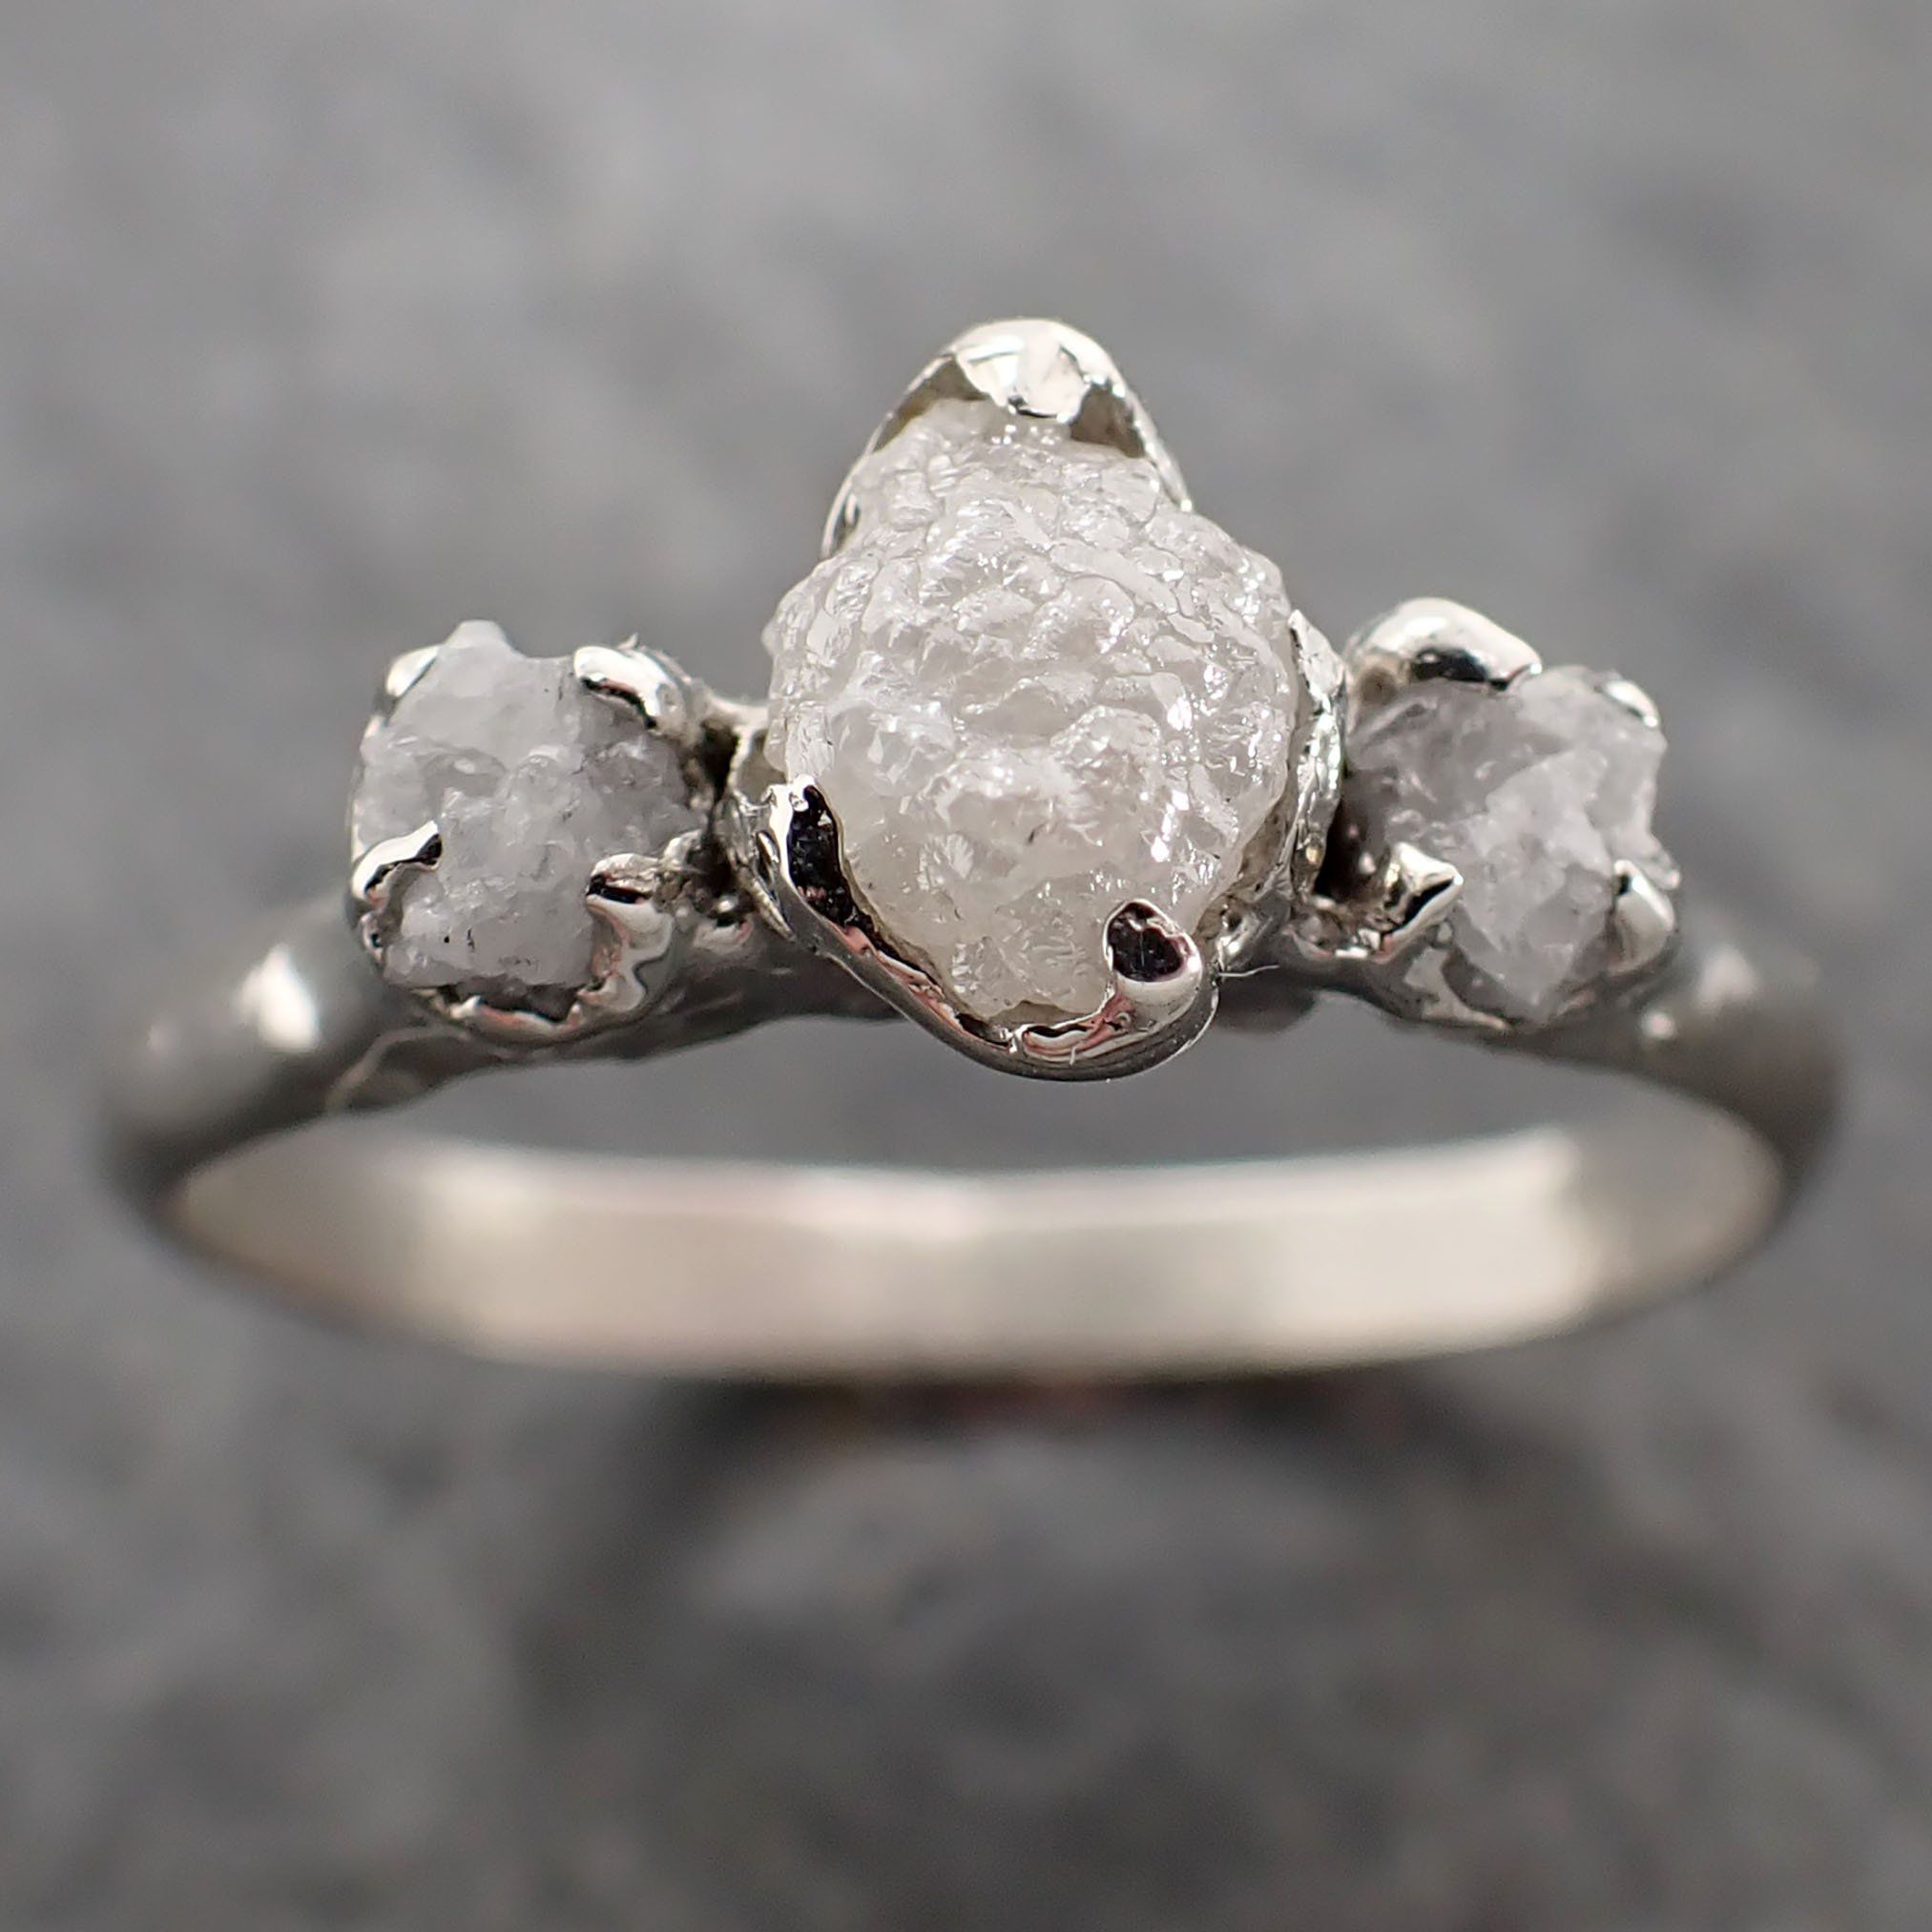 raw rough diamond engagement stacking ring multi stone wedding anniversary white gold 14k rustic byangeline c2169 Alternative Engagement